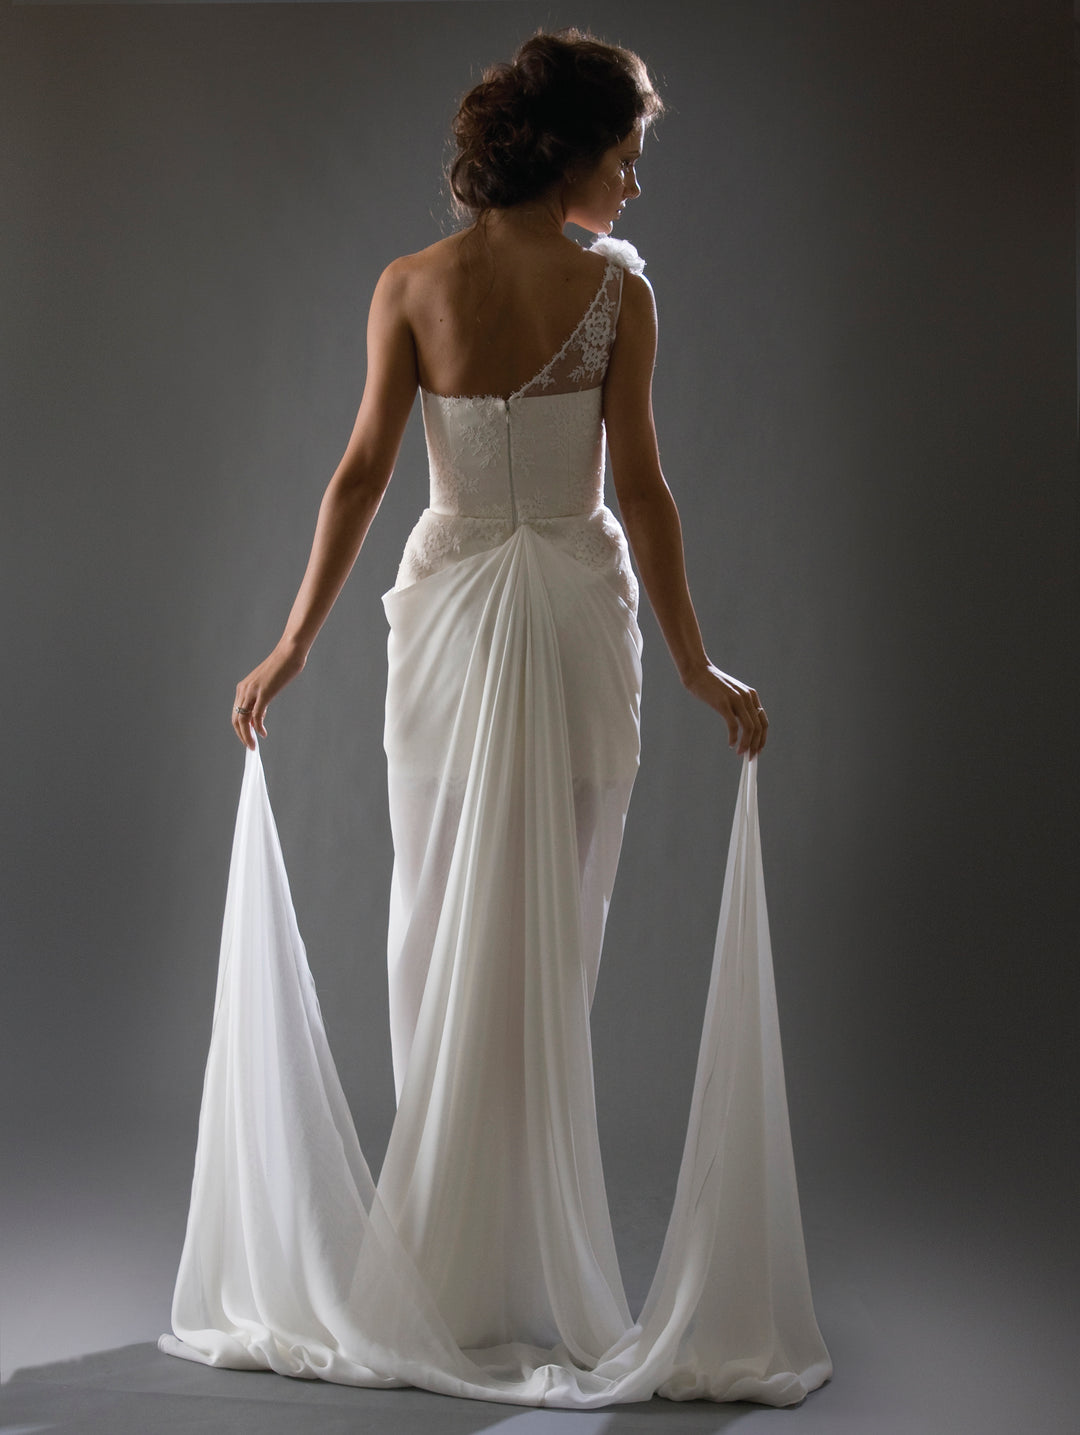 Cocoe Voci Design 'Iris' Gown Size 6 (Street Size 2)